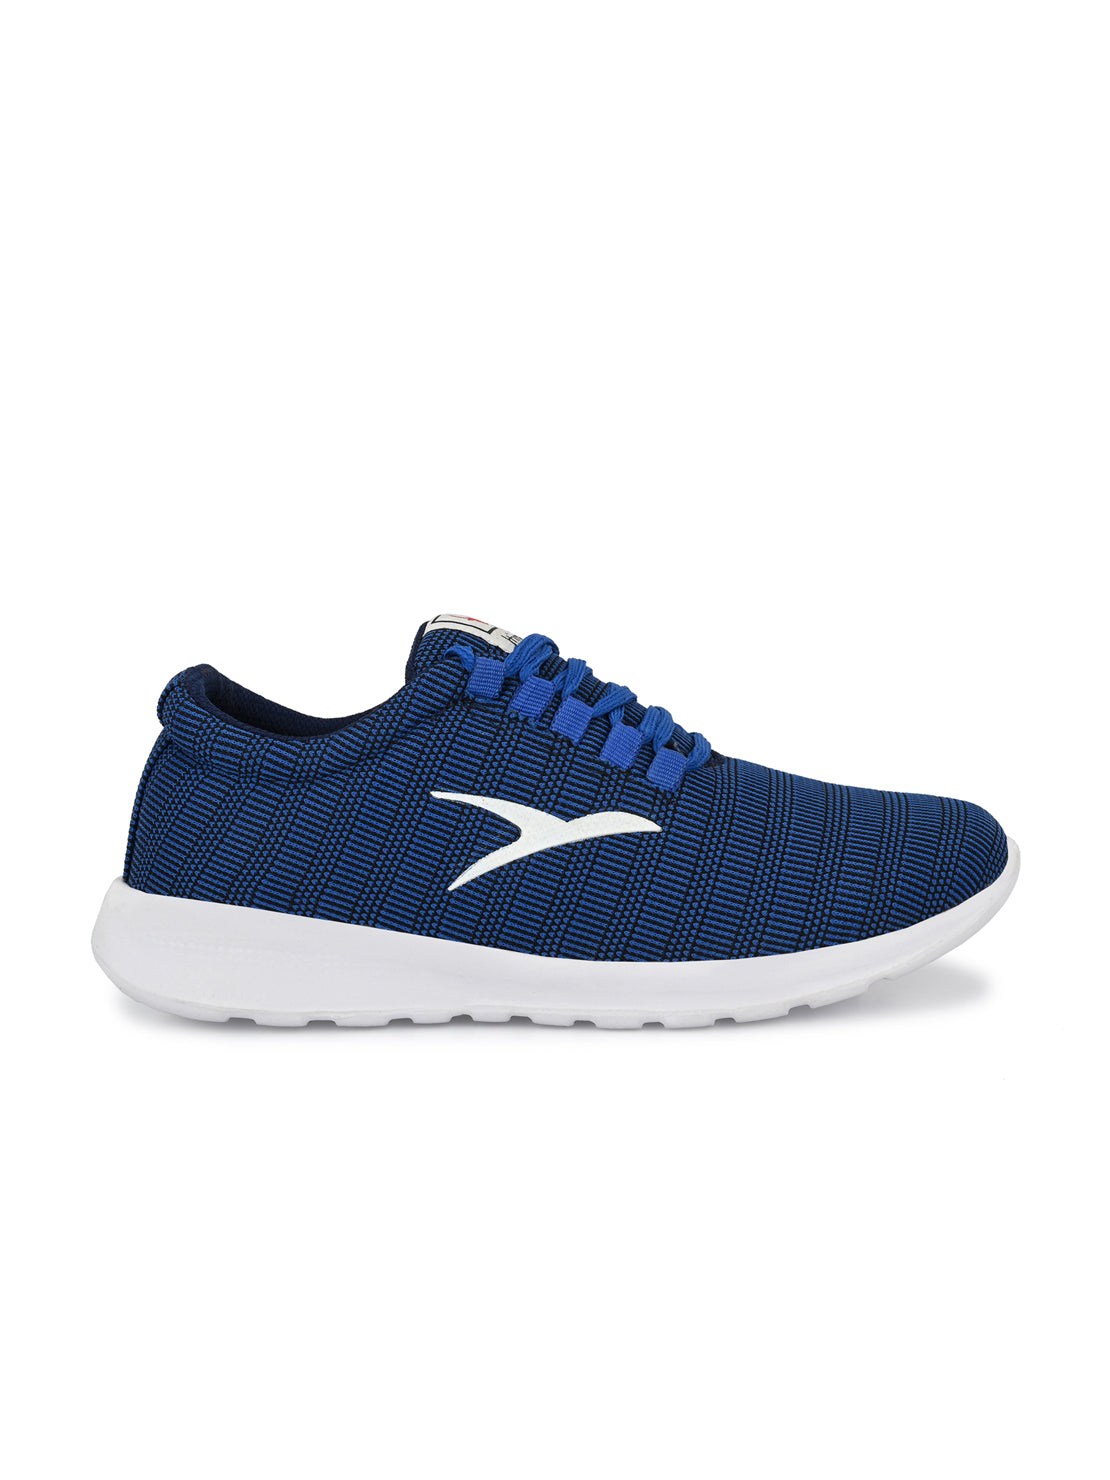 Hirolas® Men's Blue Knitted Running/Walking/Gym Lace Up Sneaker Sport Shoes (HRL1924RBU)